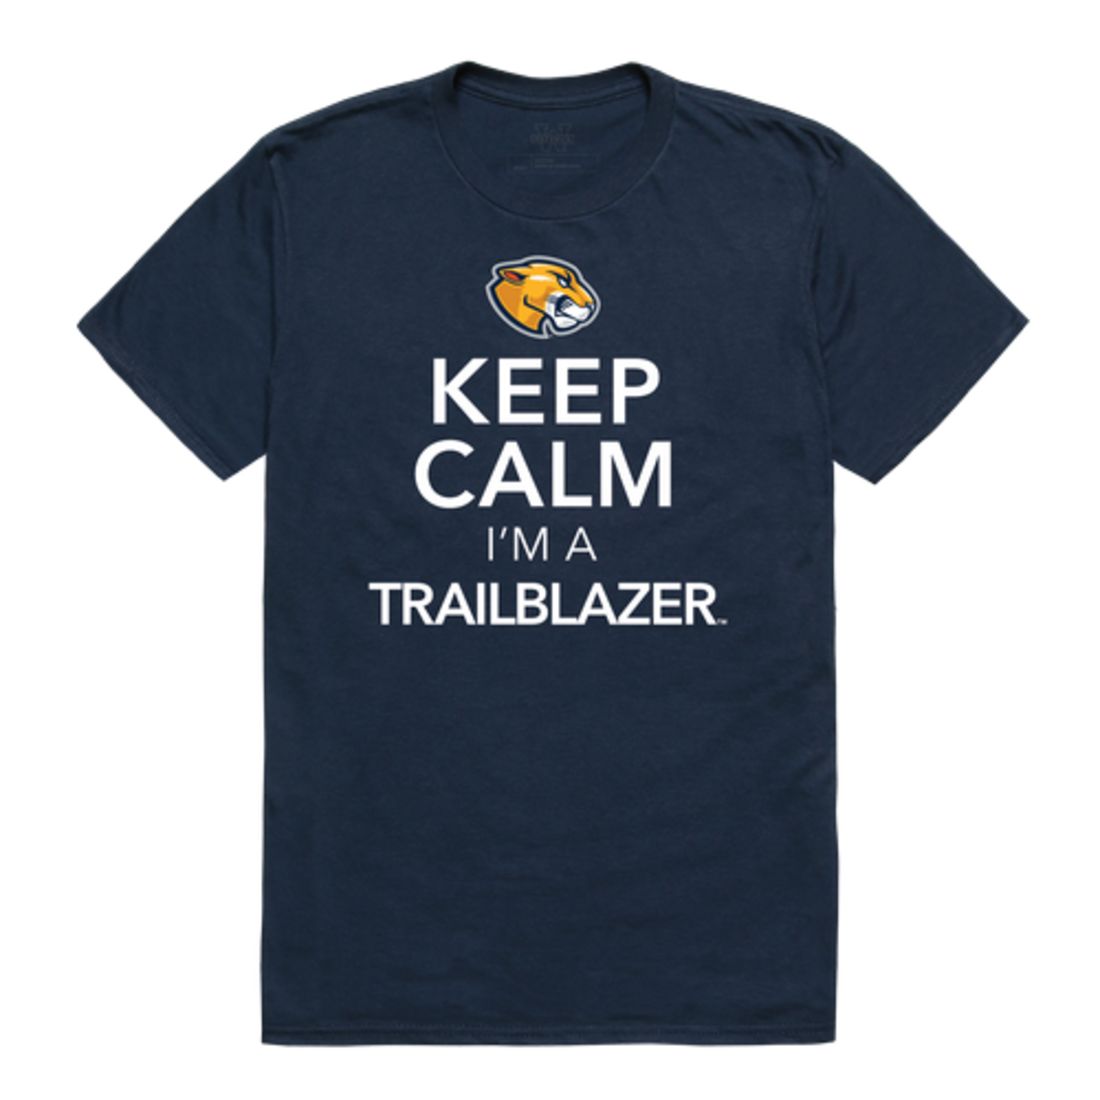 Keep Calm I'm From Massachusetts College of Liberal Arts Trailblazers T-Shirt Tee